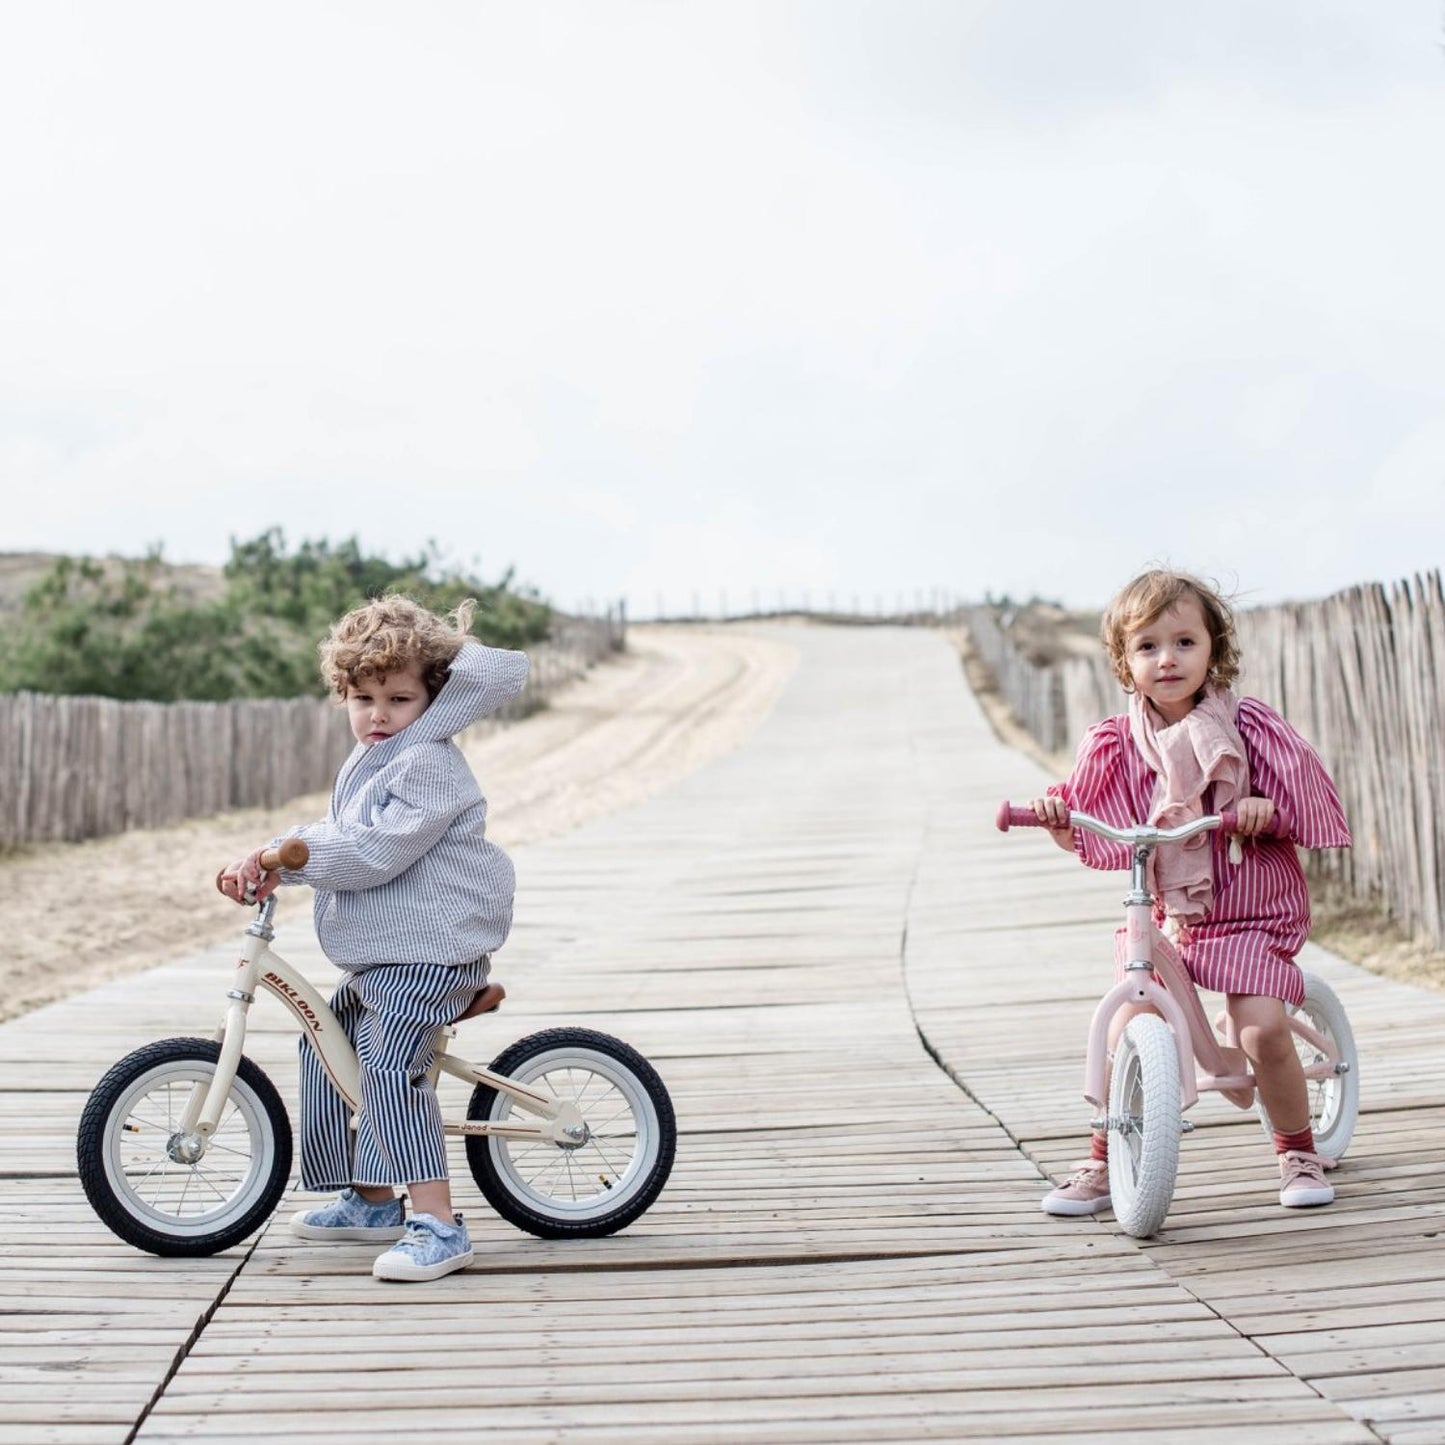 Balance Bike | Pink | Bikes & Scooters for Kids